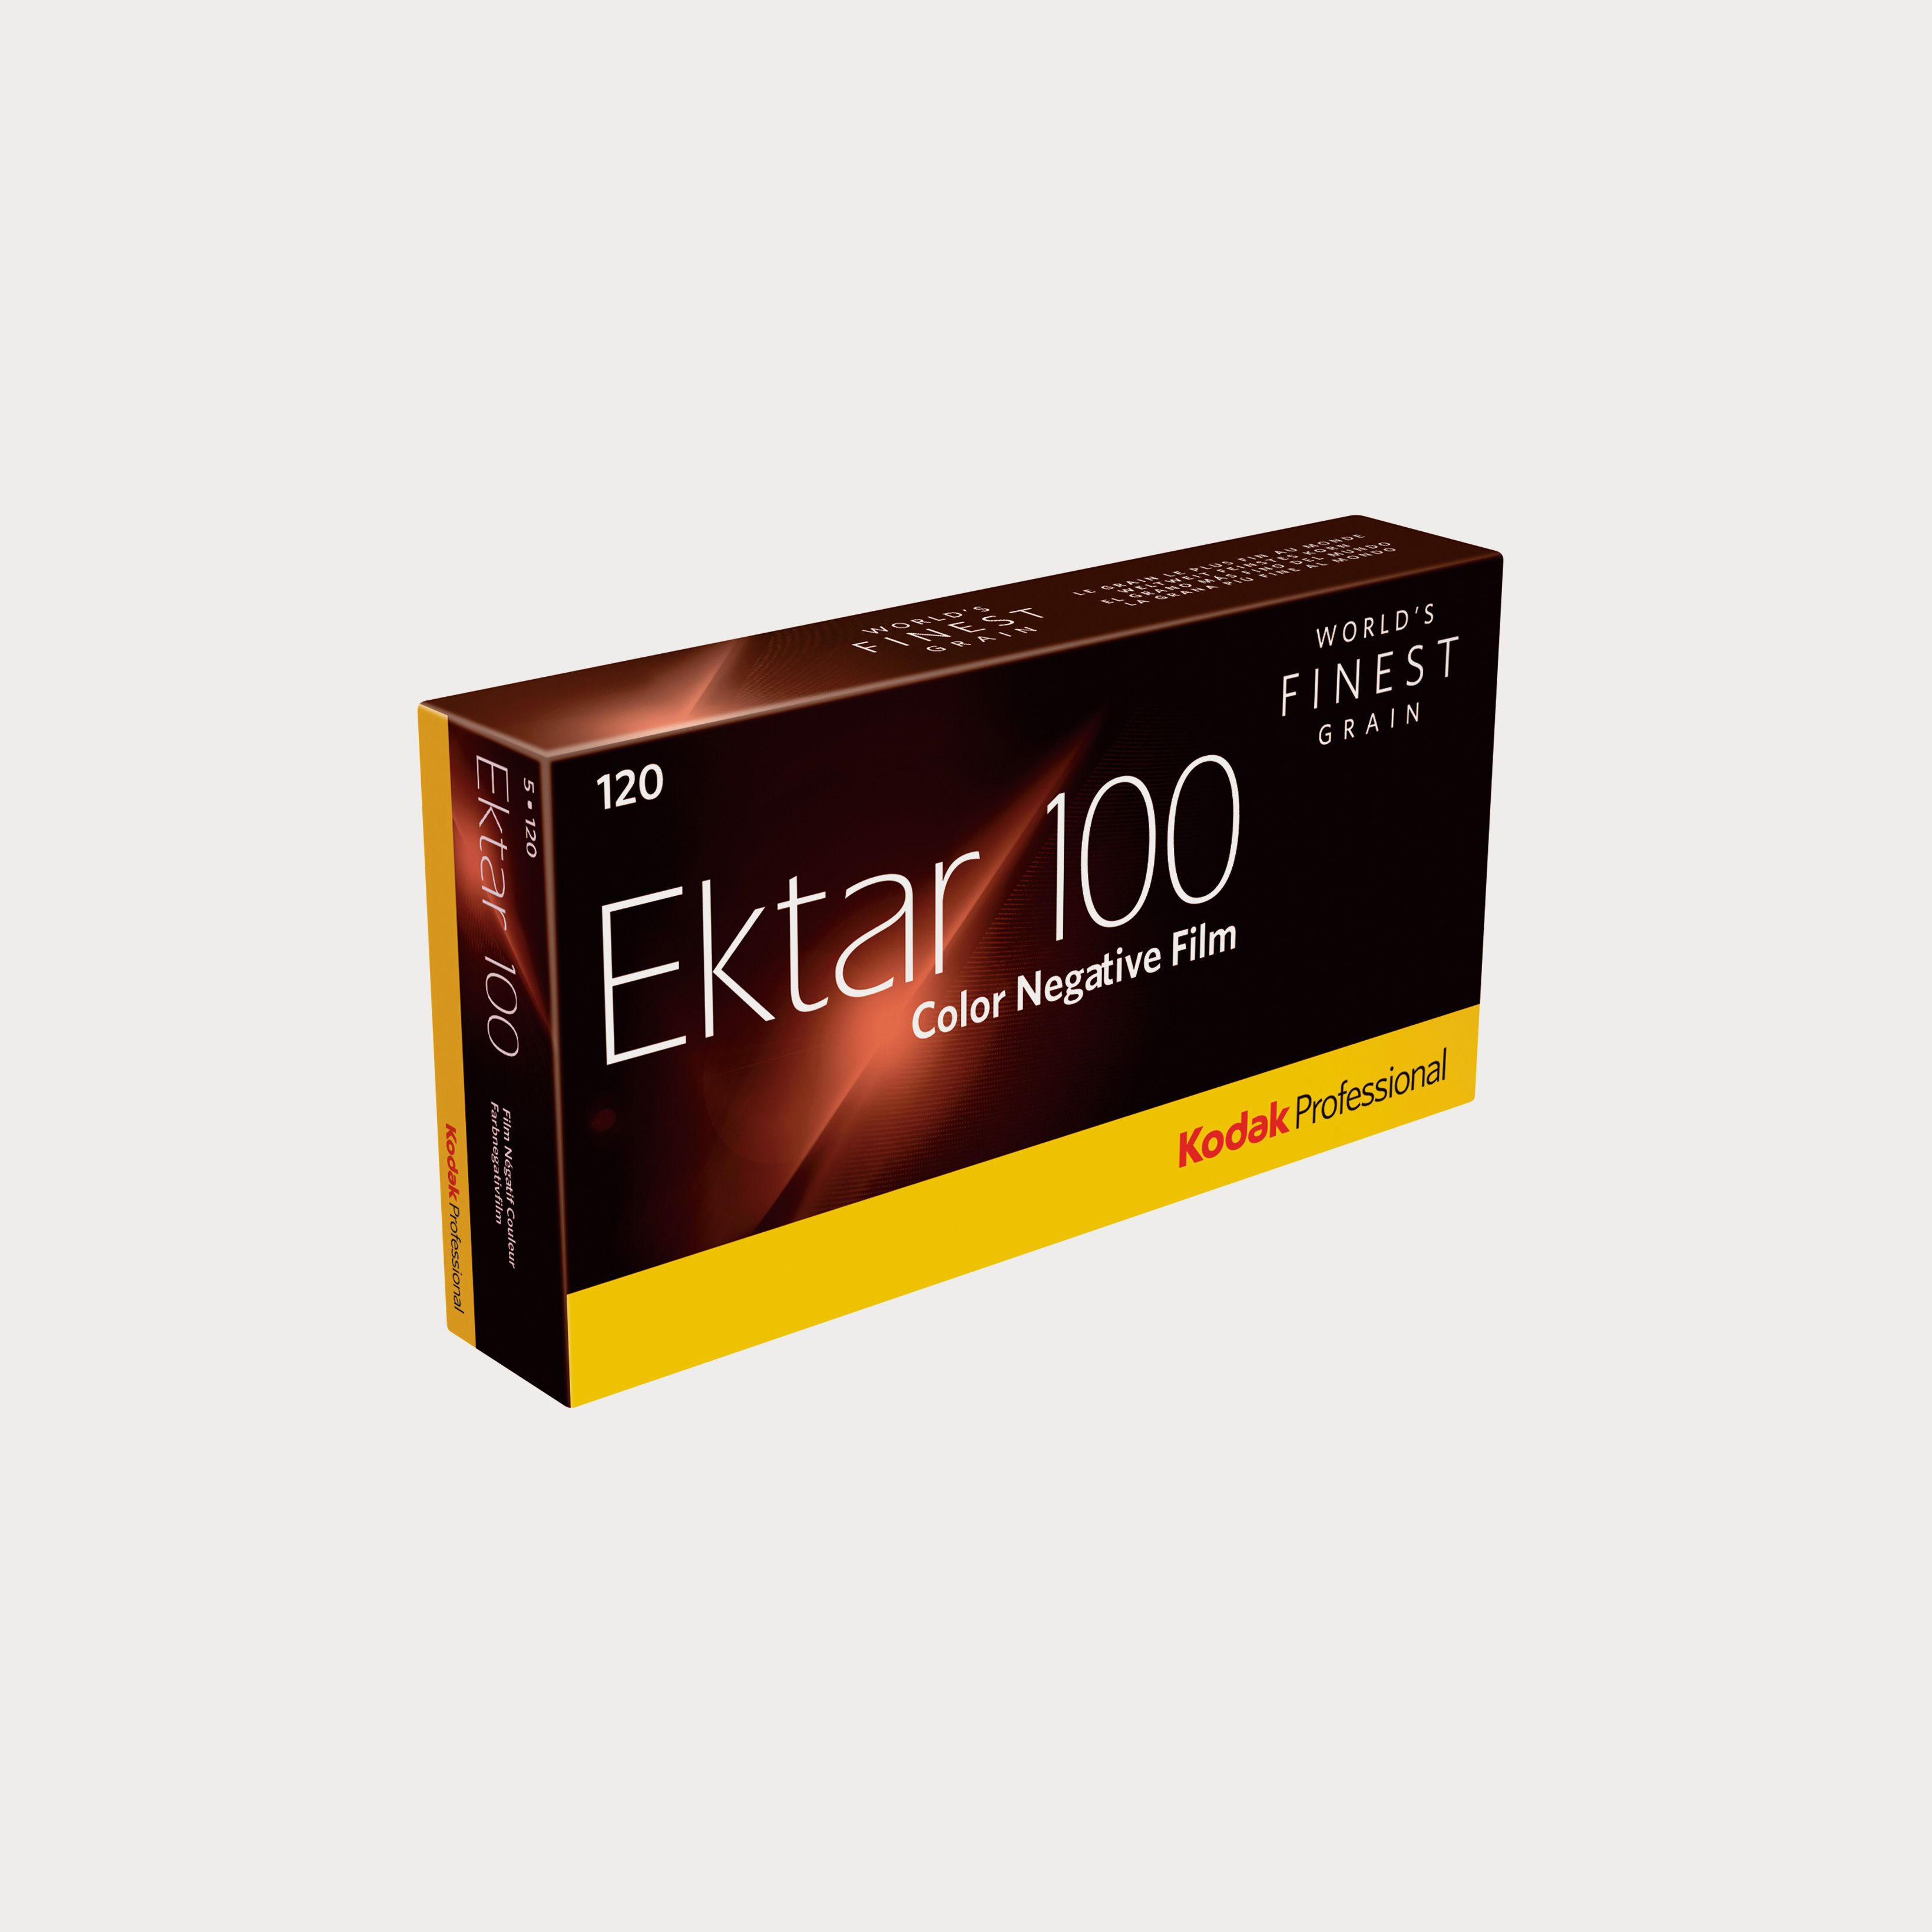 Kodak Professional Ektar 100 Color Negative 120 Film - 5 Rolls (single box)